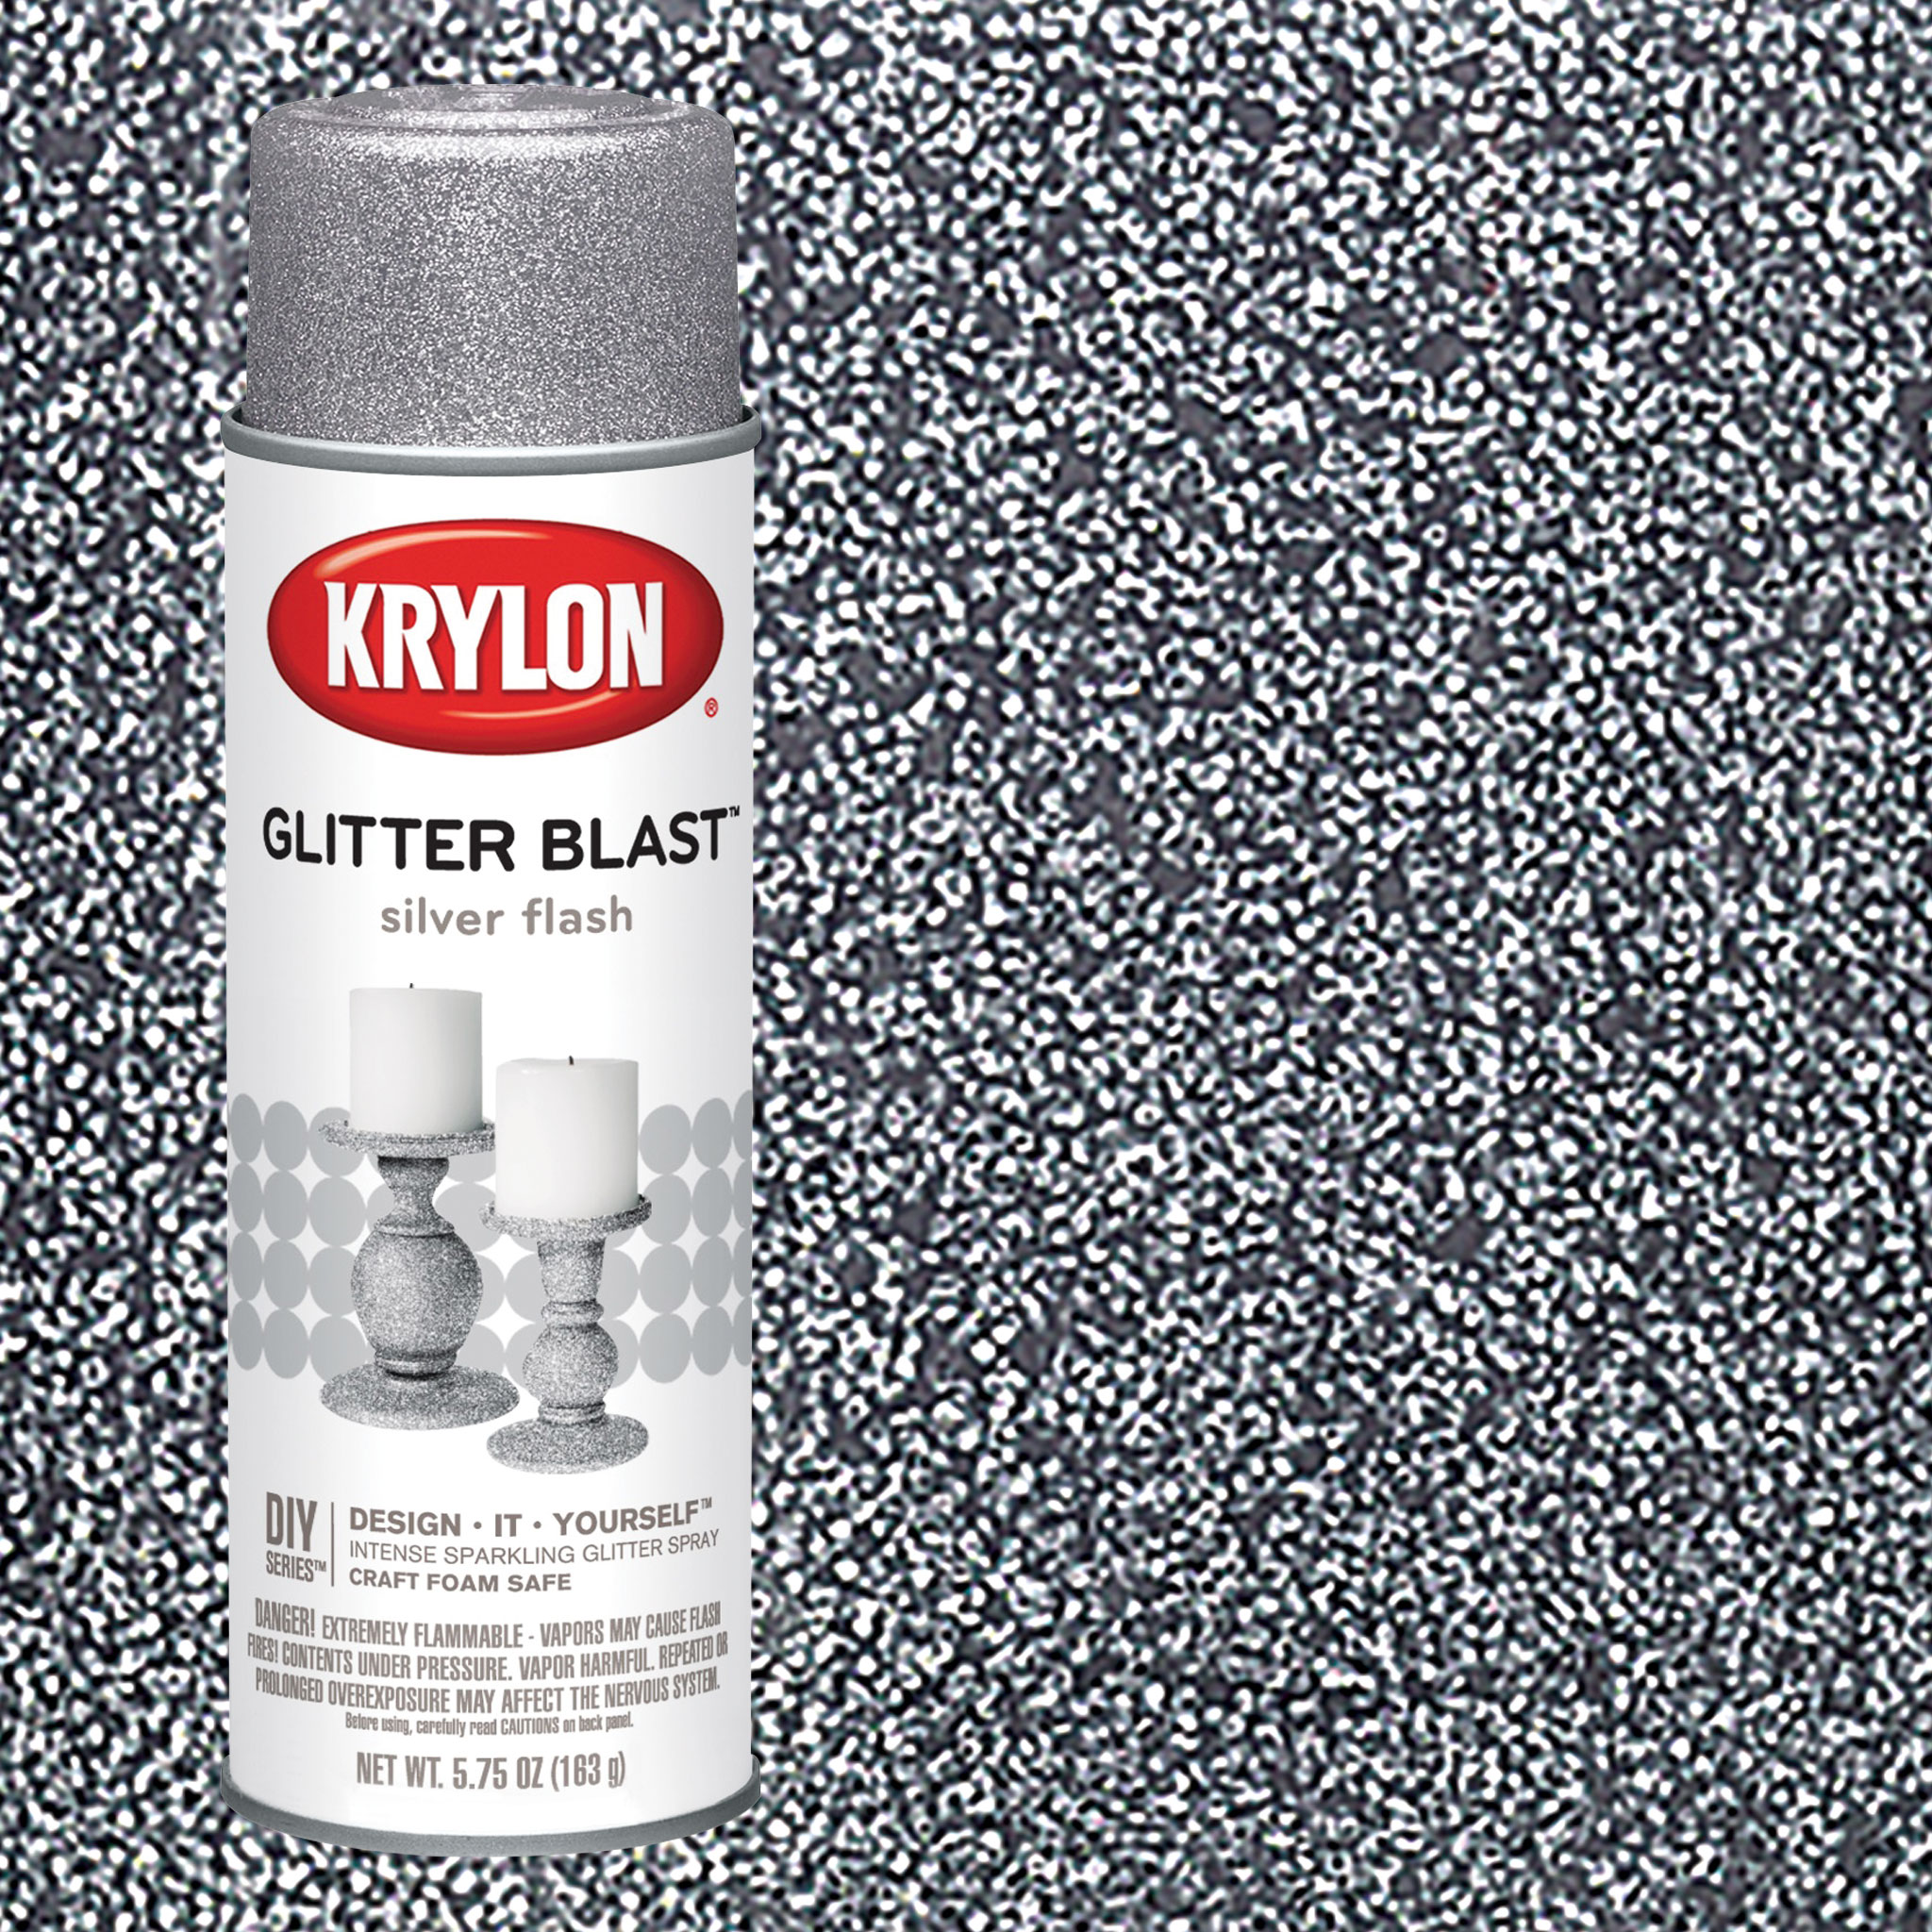 Krylon Glitter Blast Glitter Spray Paint, 5.7 oz., Sparkling Waters